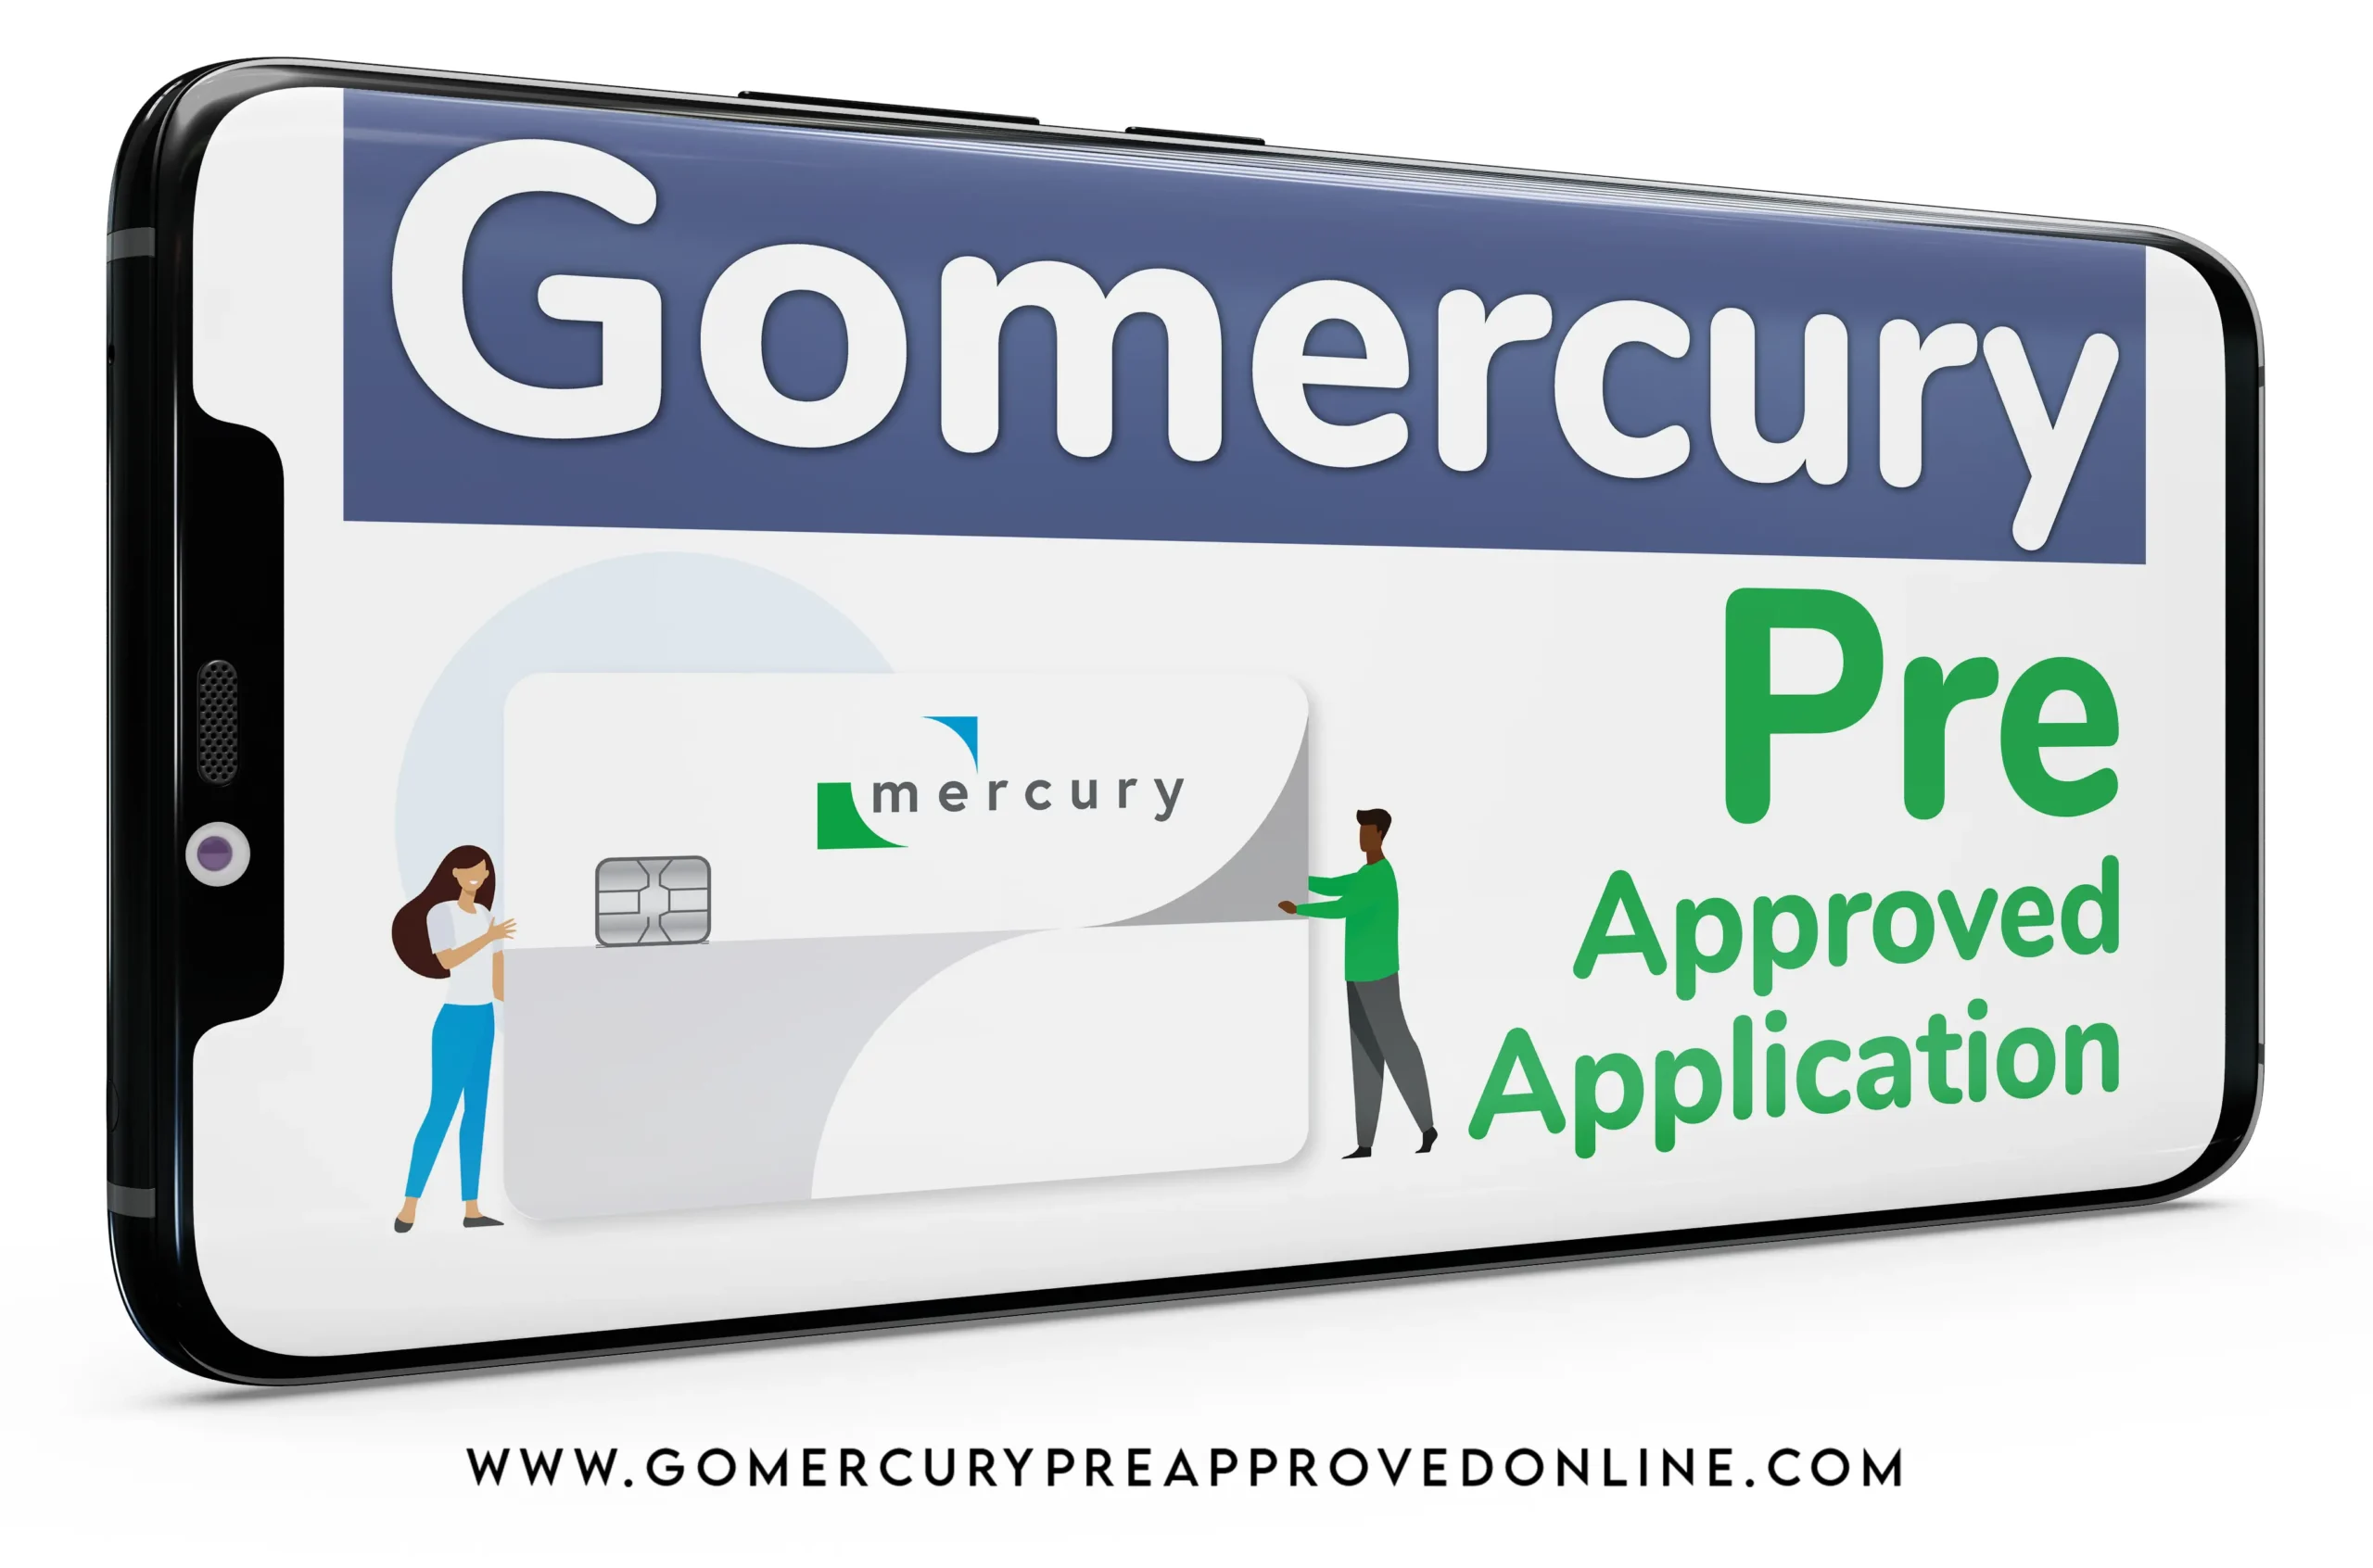 www.gomercury.com pre approved application